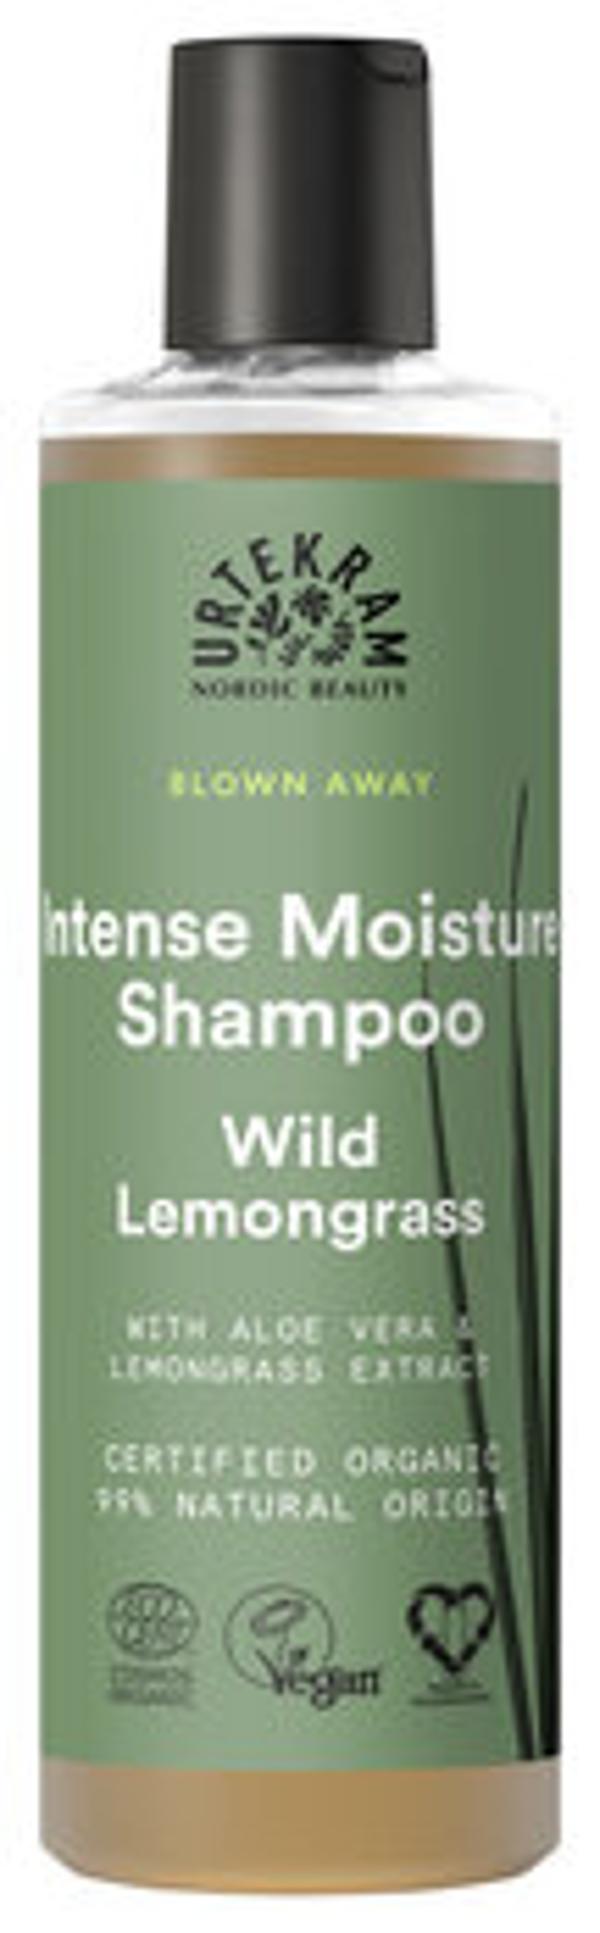 Produktfoto zu Shampoo Wild Lemongrass 250ml